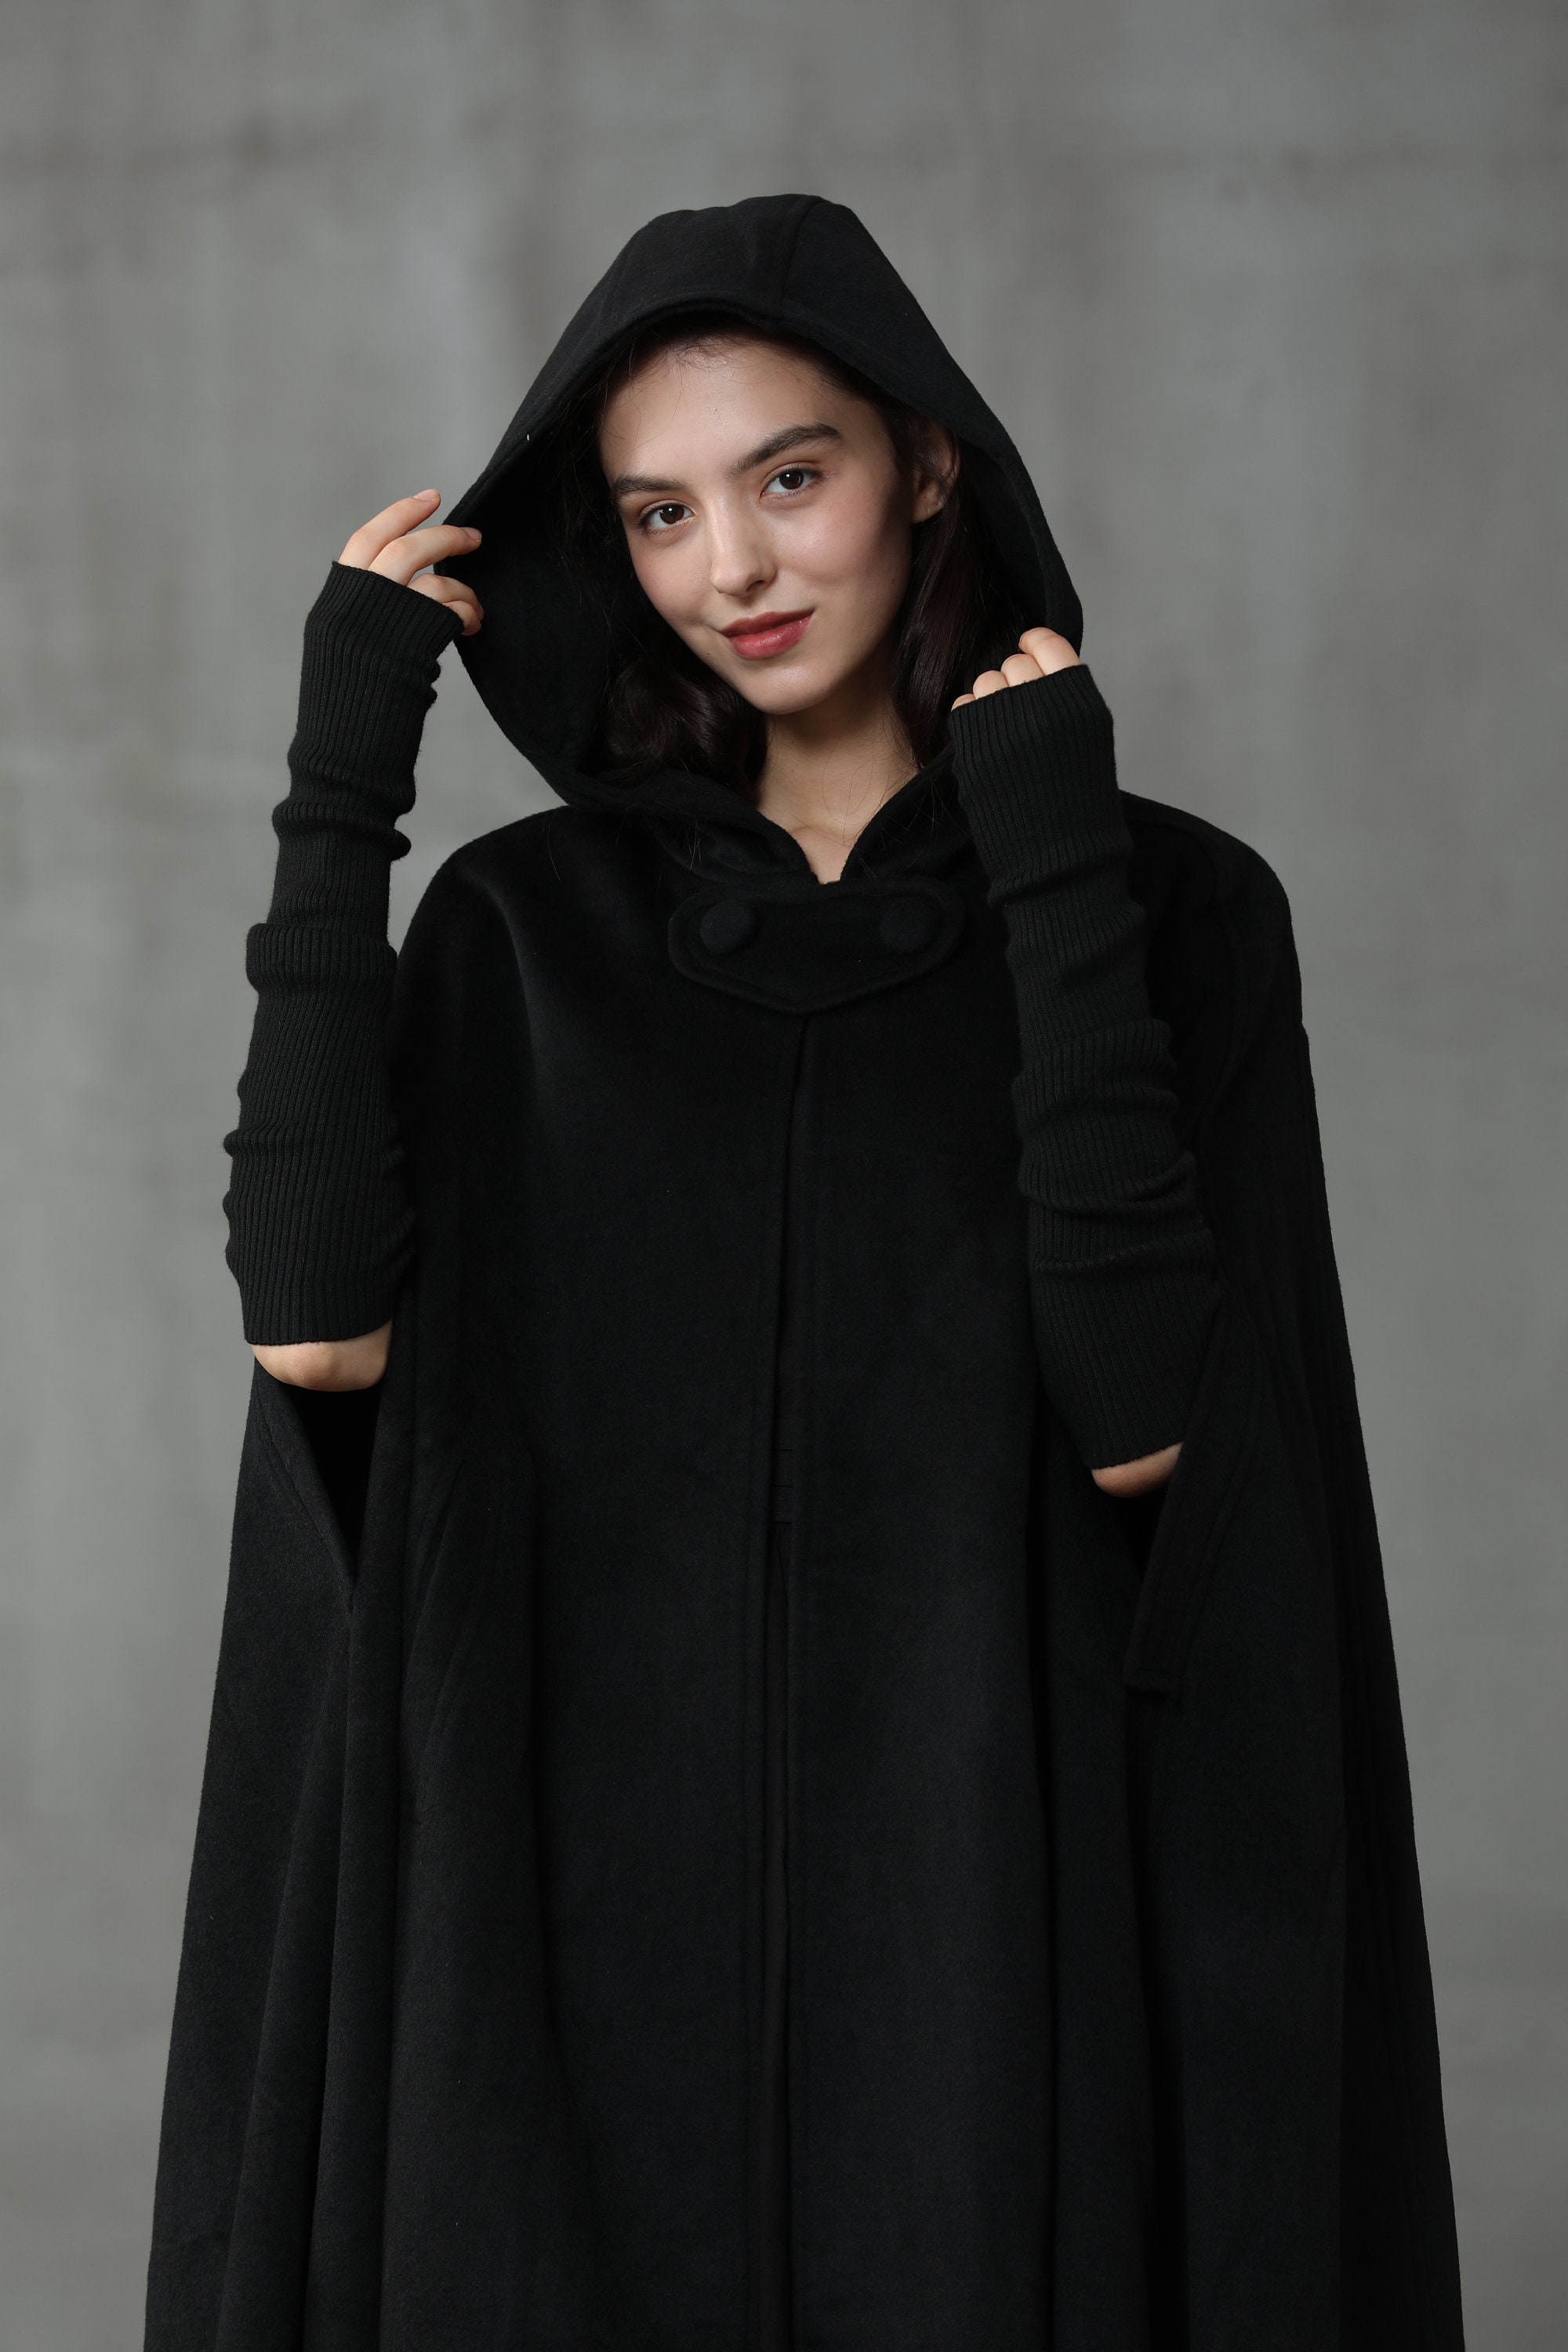 Linennaive Cloak Black Hooded Wool Coat Cloak Maxi Hooded | Etsy Canada